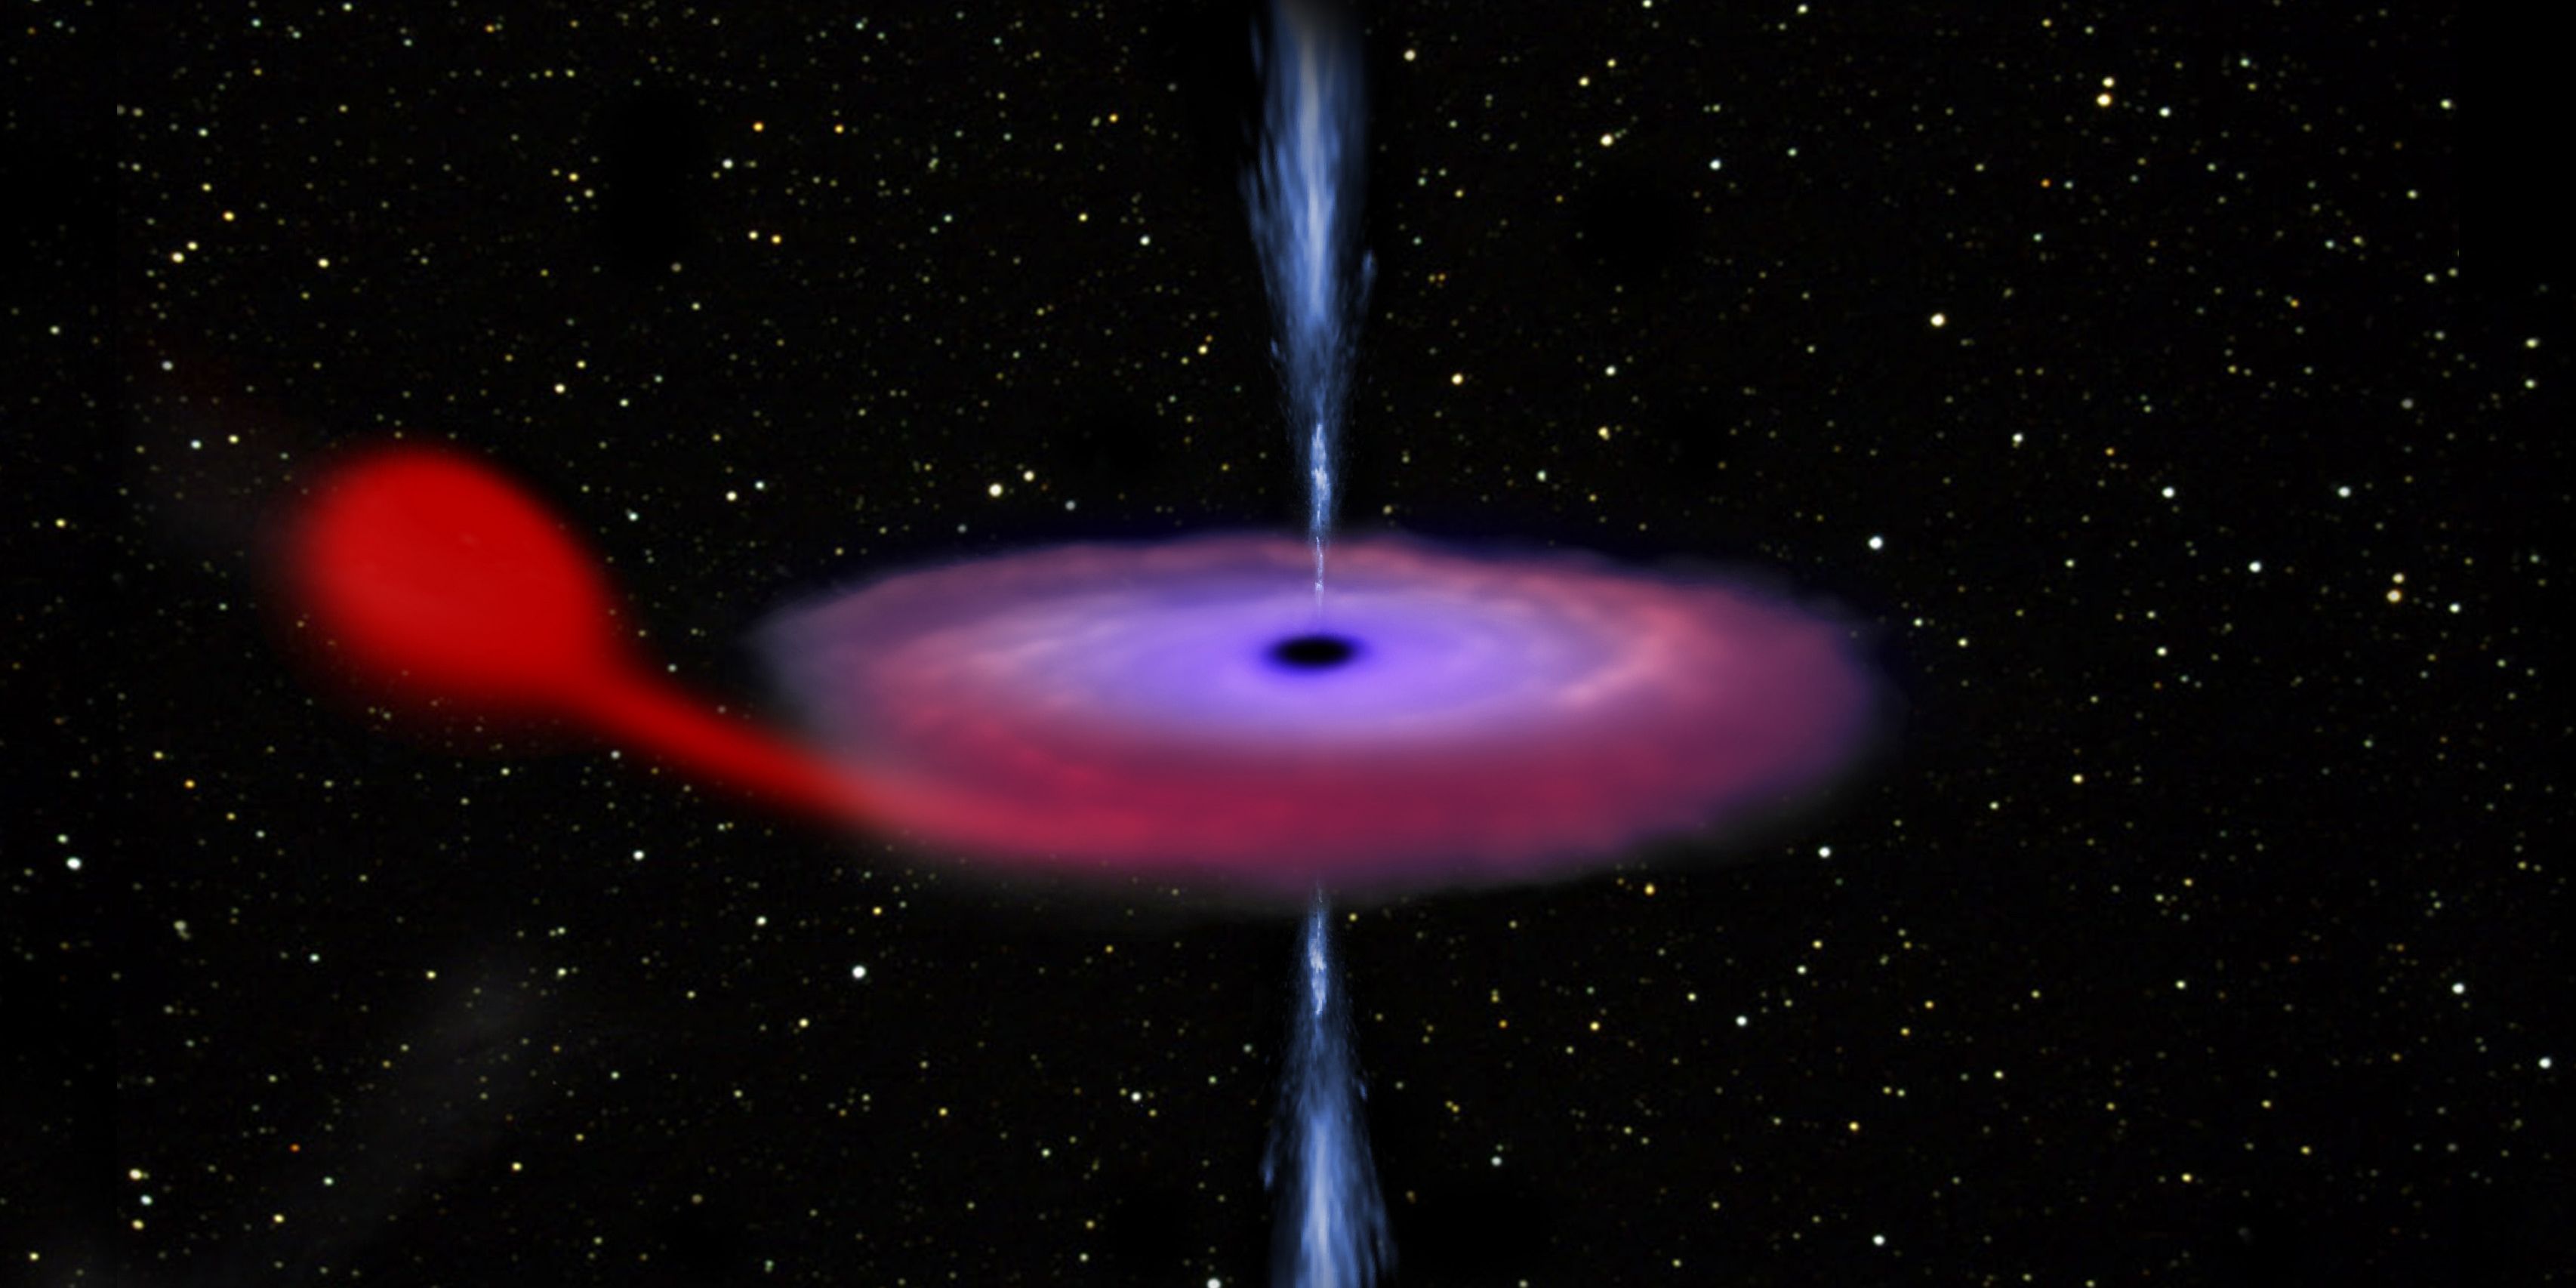 An artist's illustration of black hole V404 Cygni